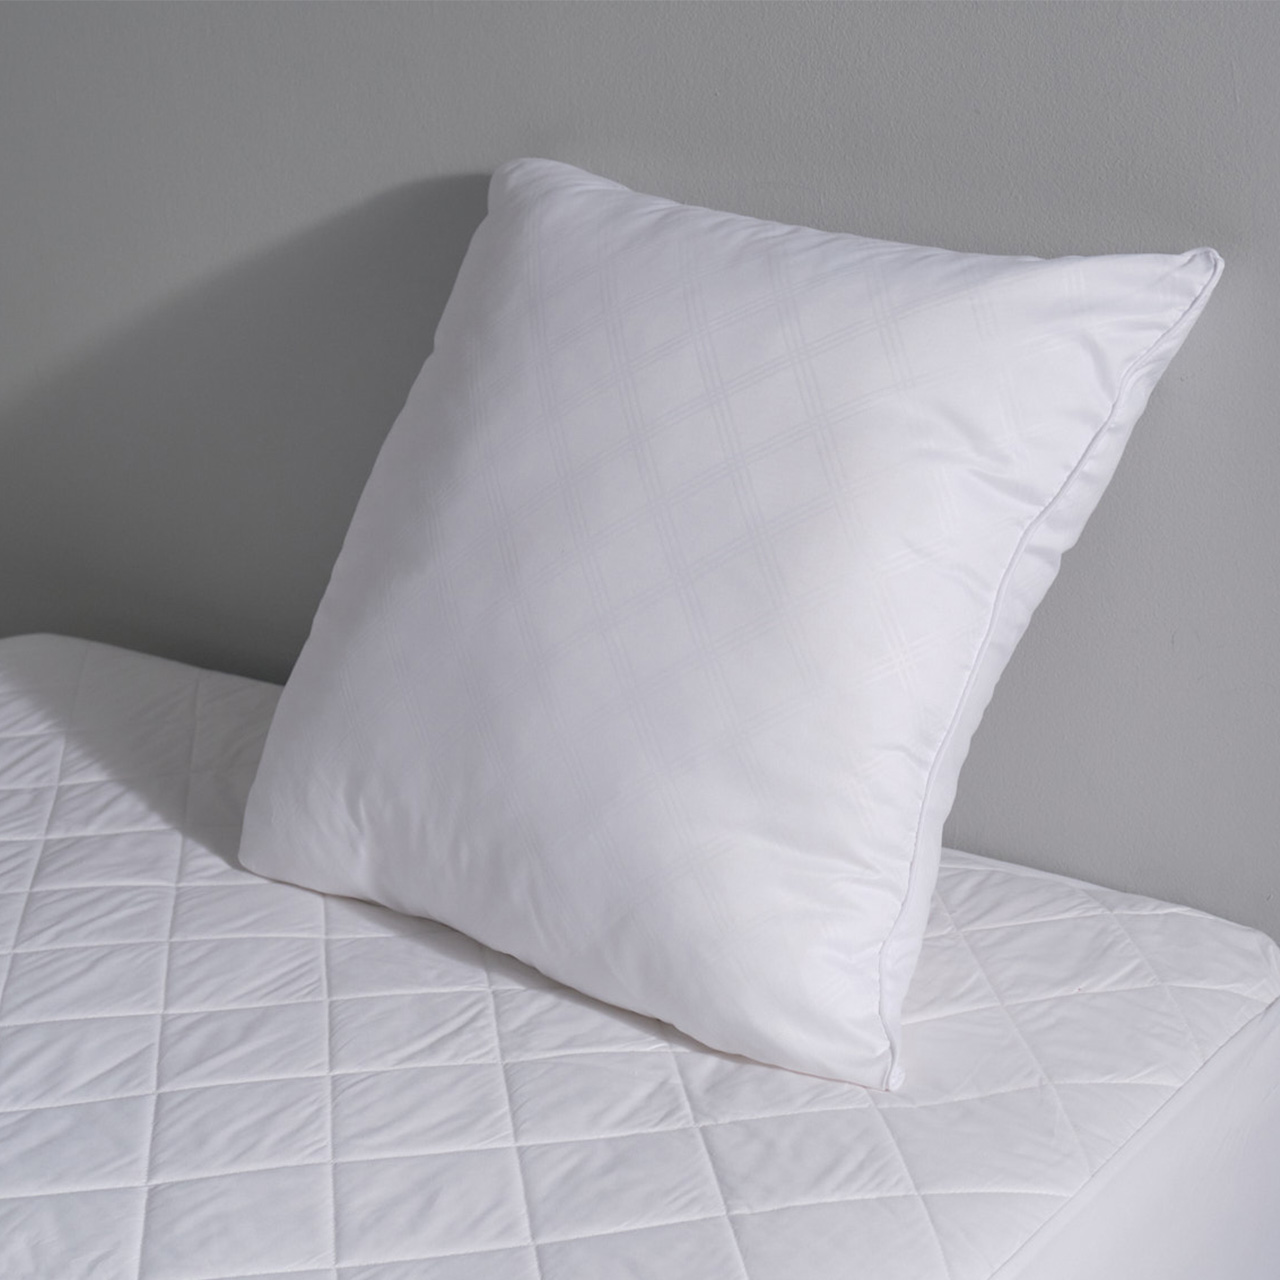 Hypoallergenic European Pillow